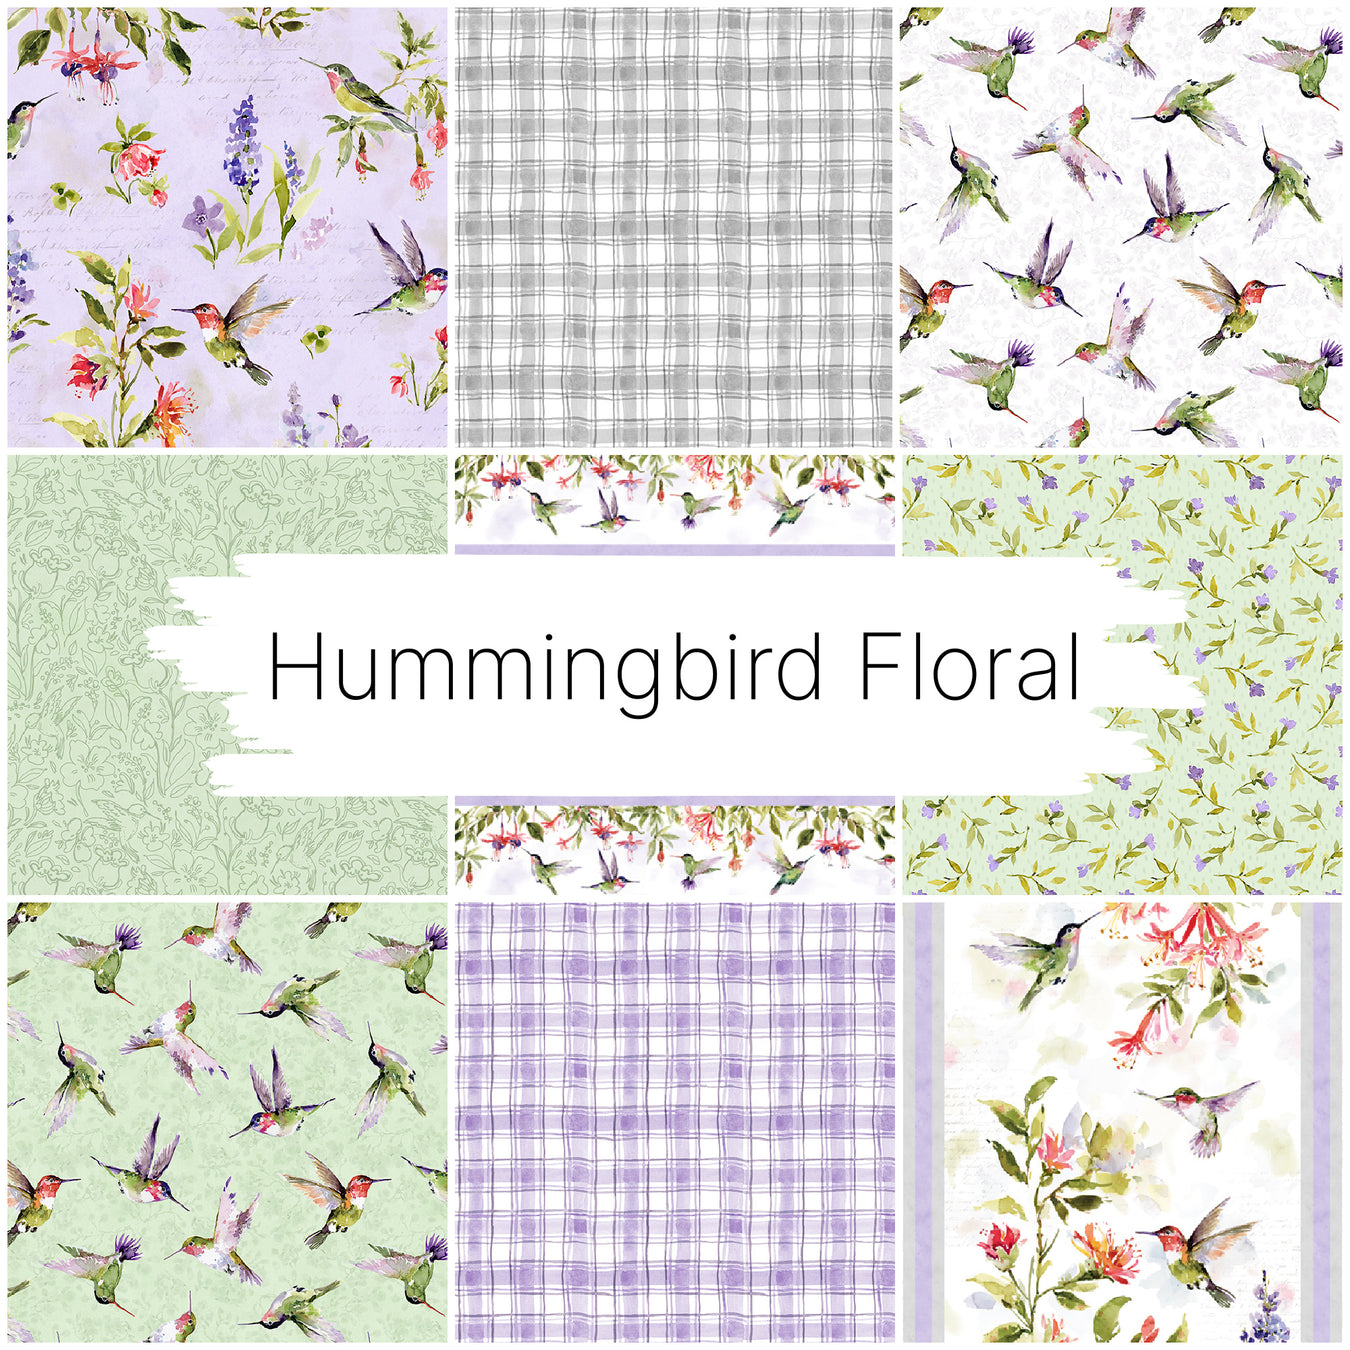 Hummingbird Floral